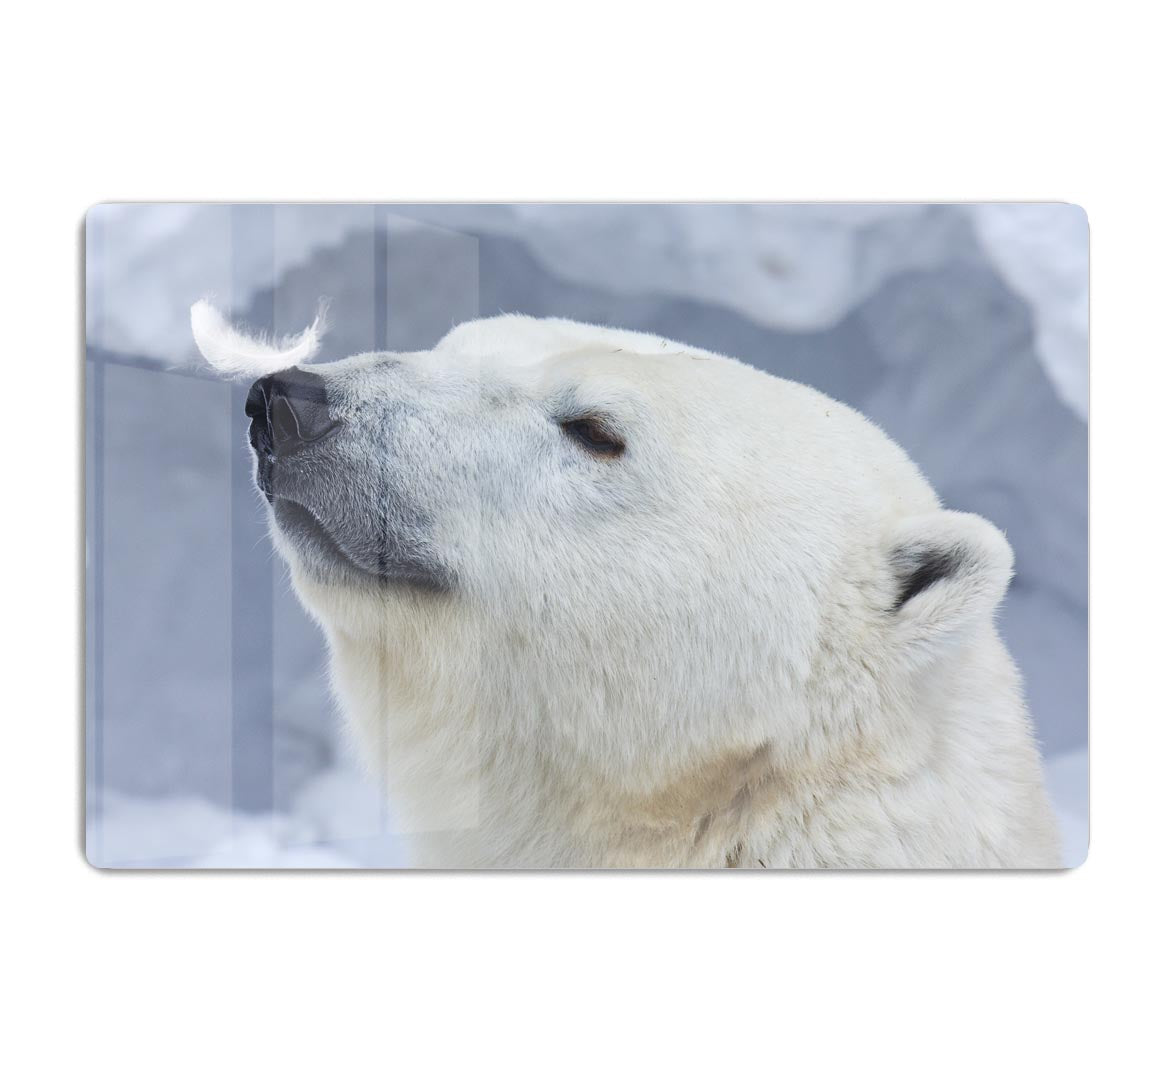 Polar bear White Acrylic Block - 1x - 1